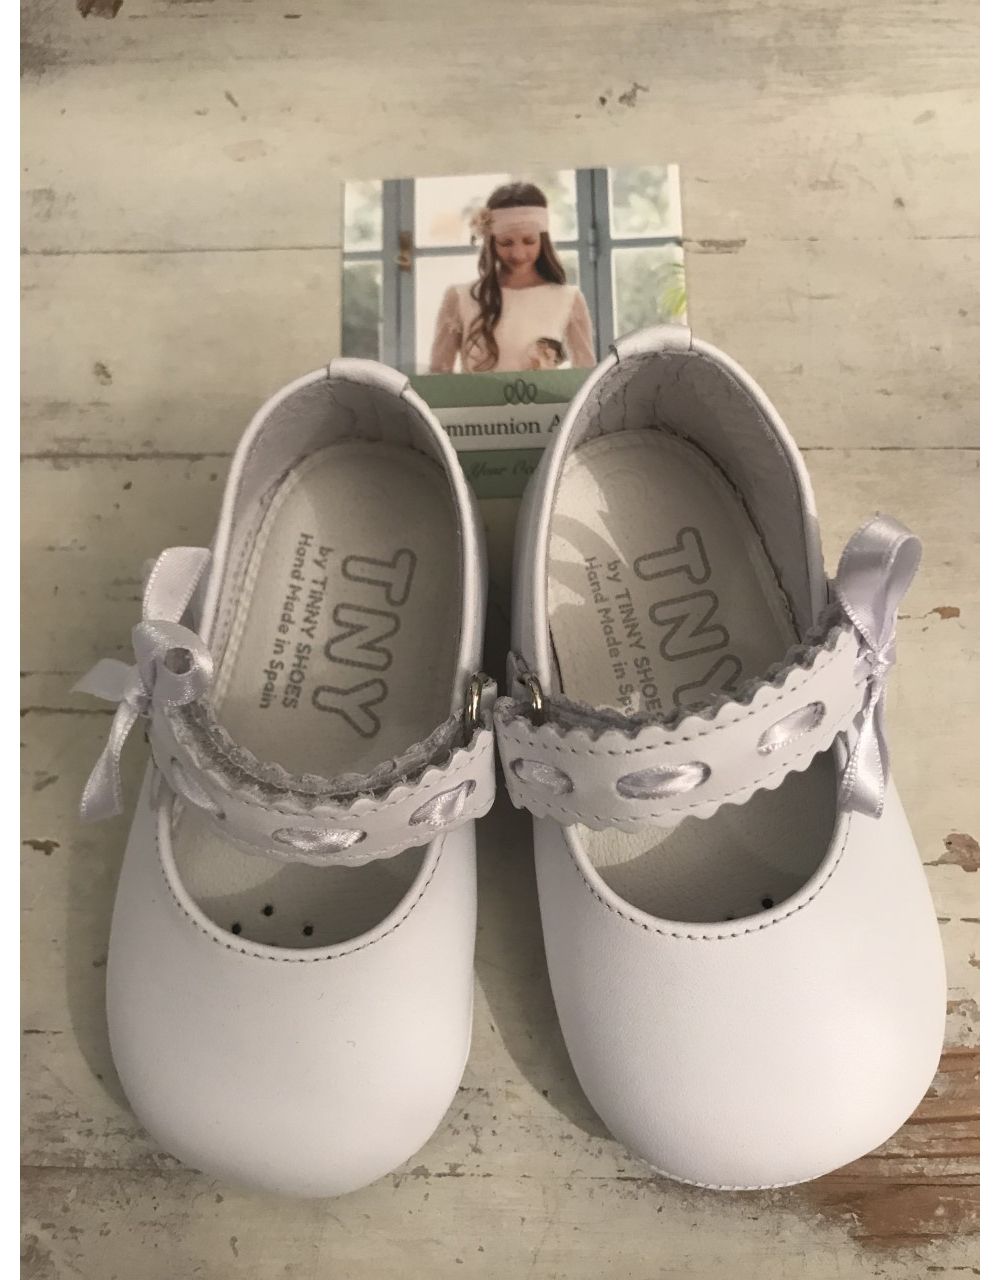 Spanish Handmade White Leather Baby Shoes